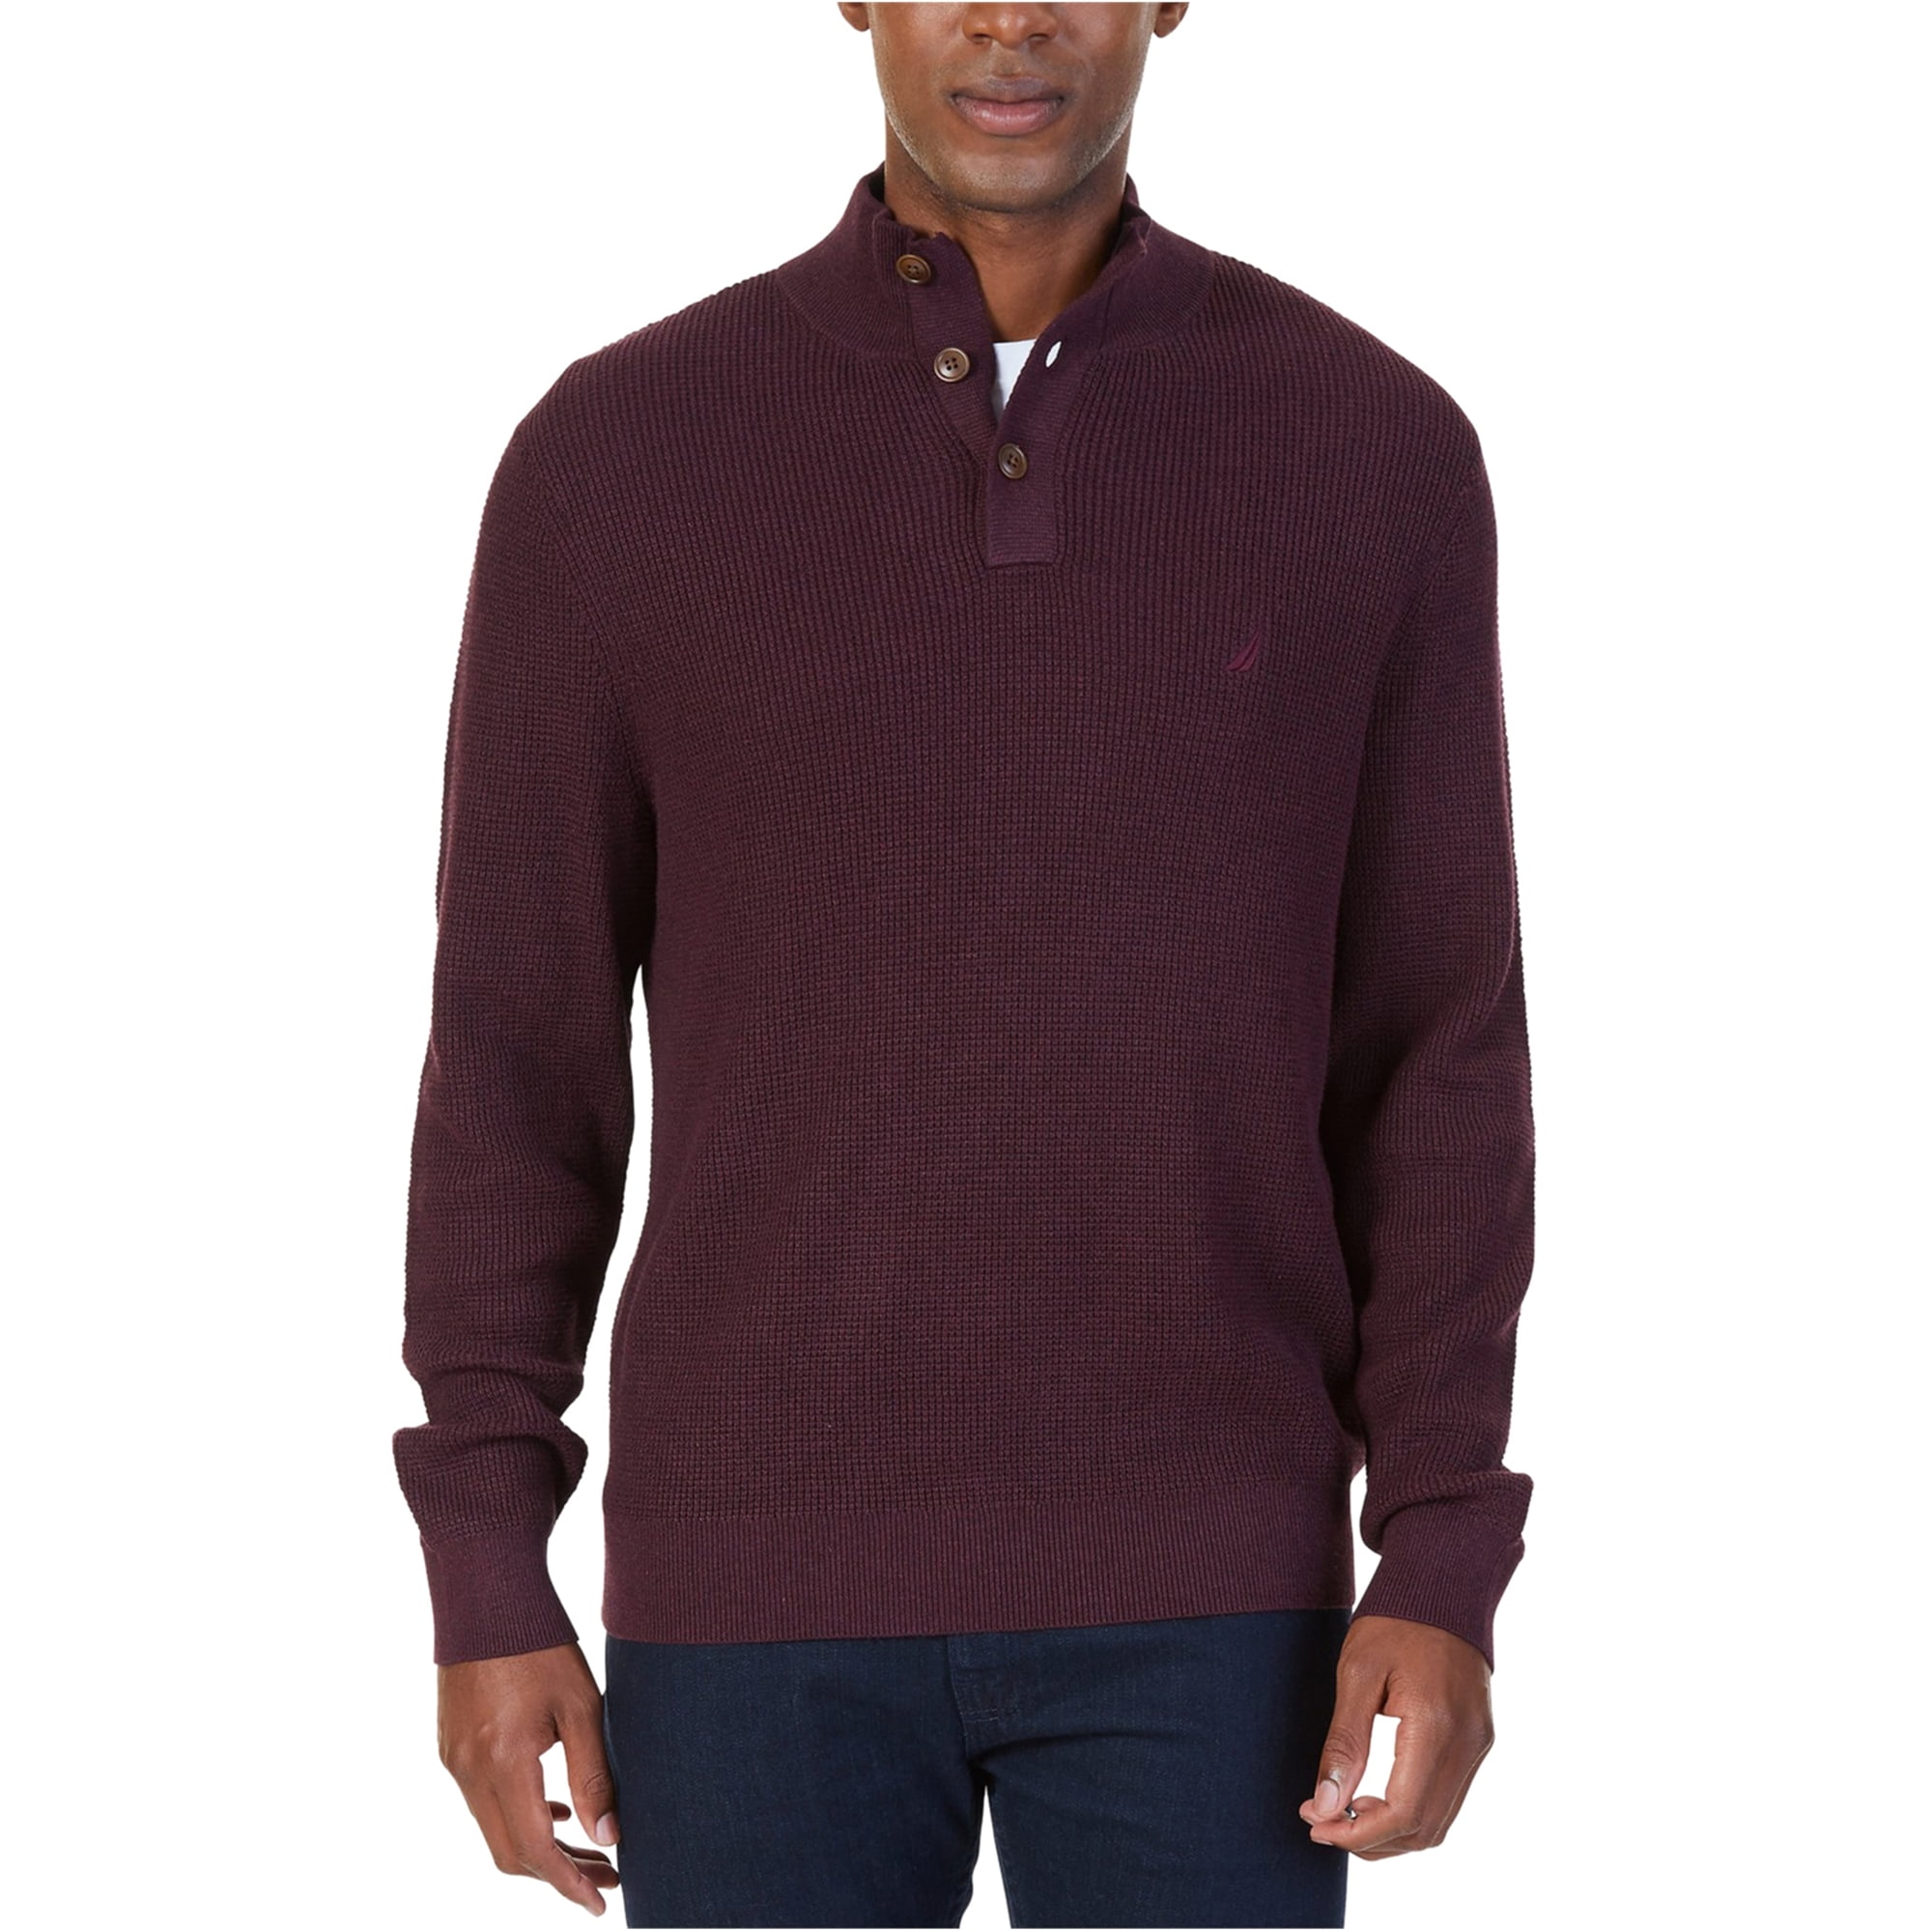 Nautica - Nautica Mens Ribbed Pullover Sweater - Walmart.com - Walmart.com